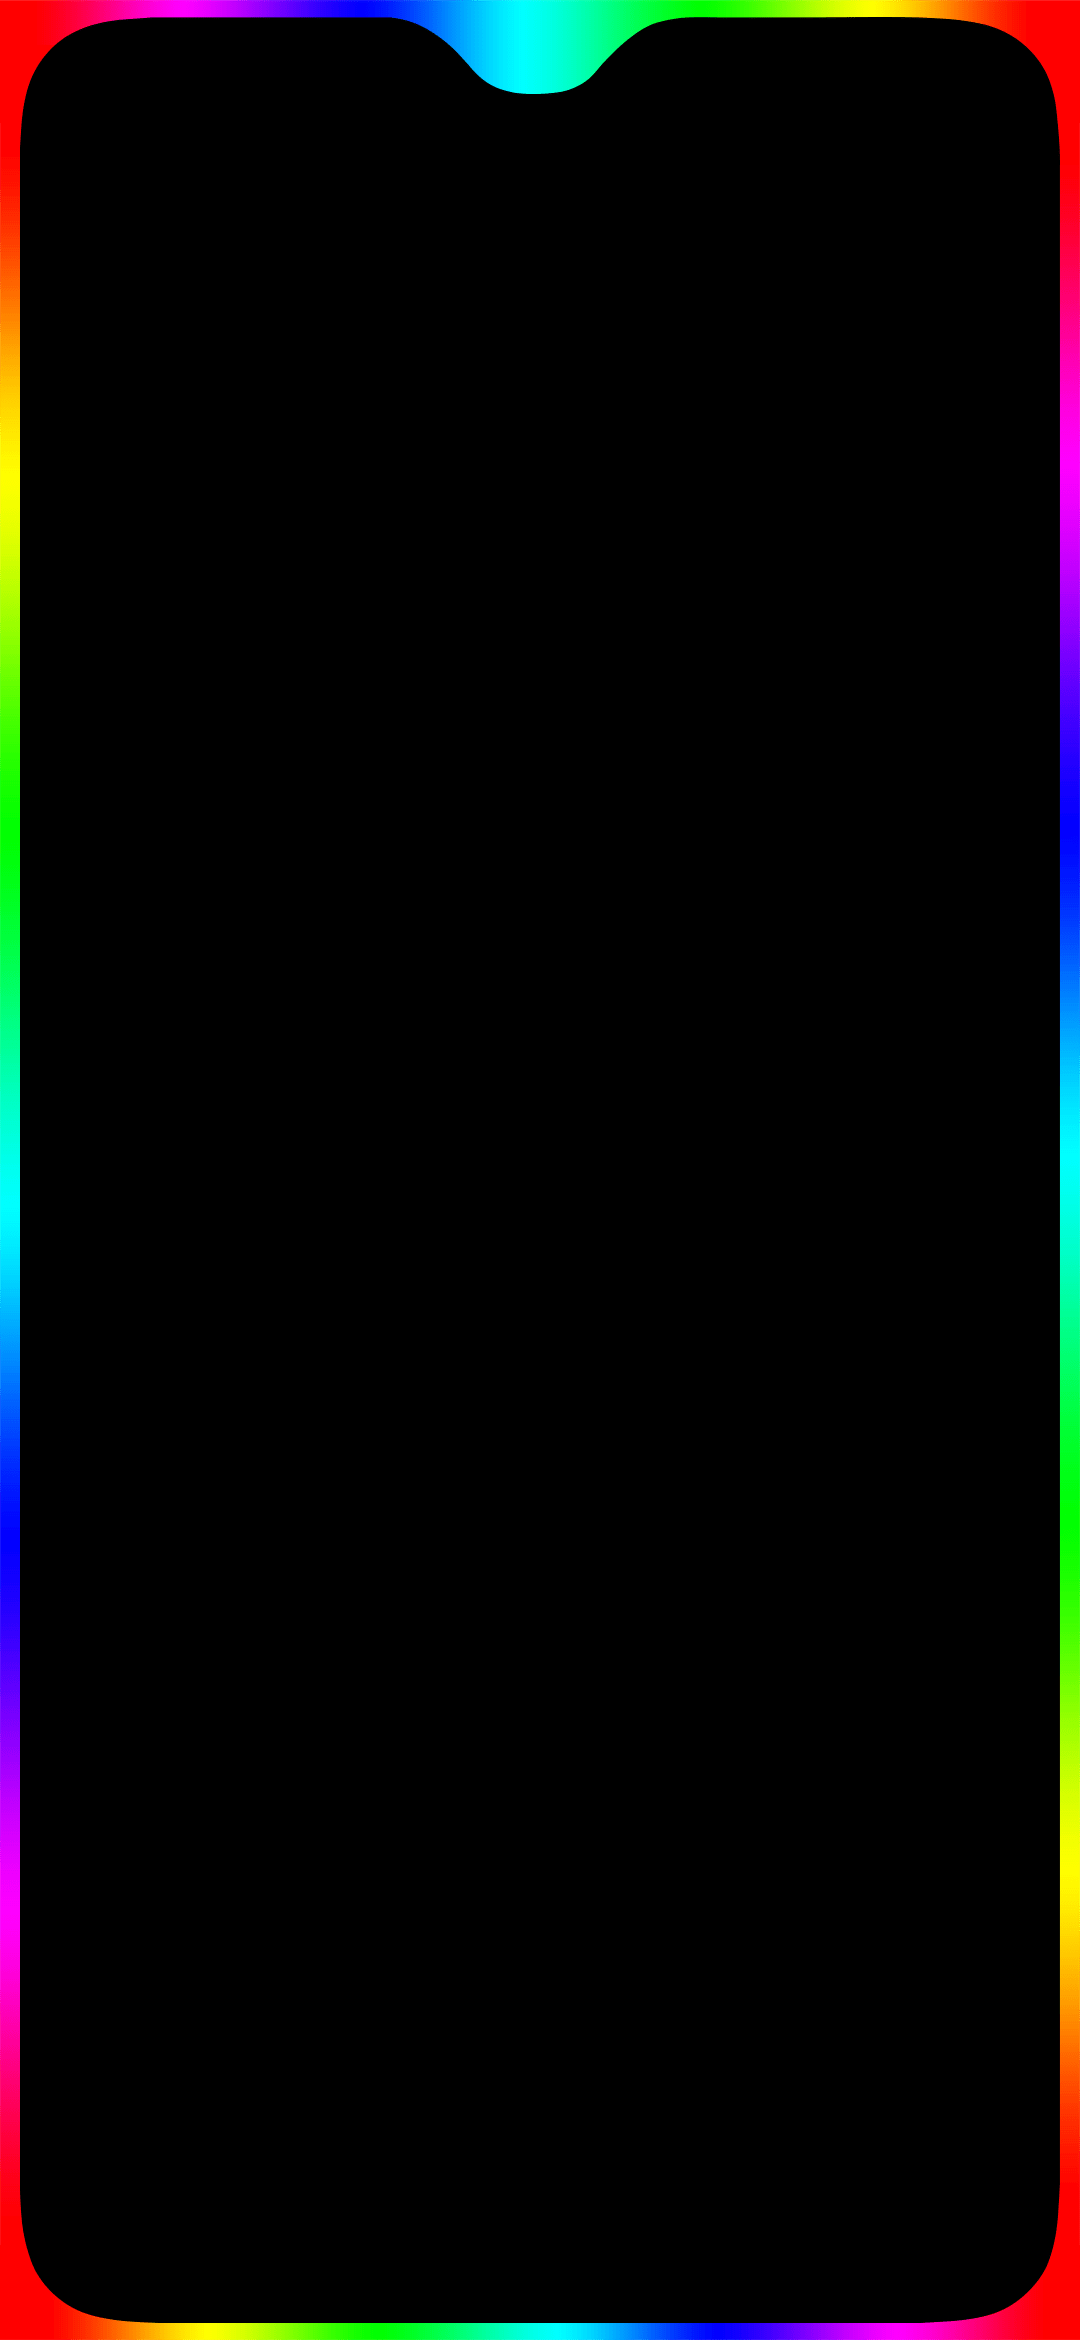 RGB Frame Screen Wallpaper Download  MOONAZ